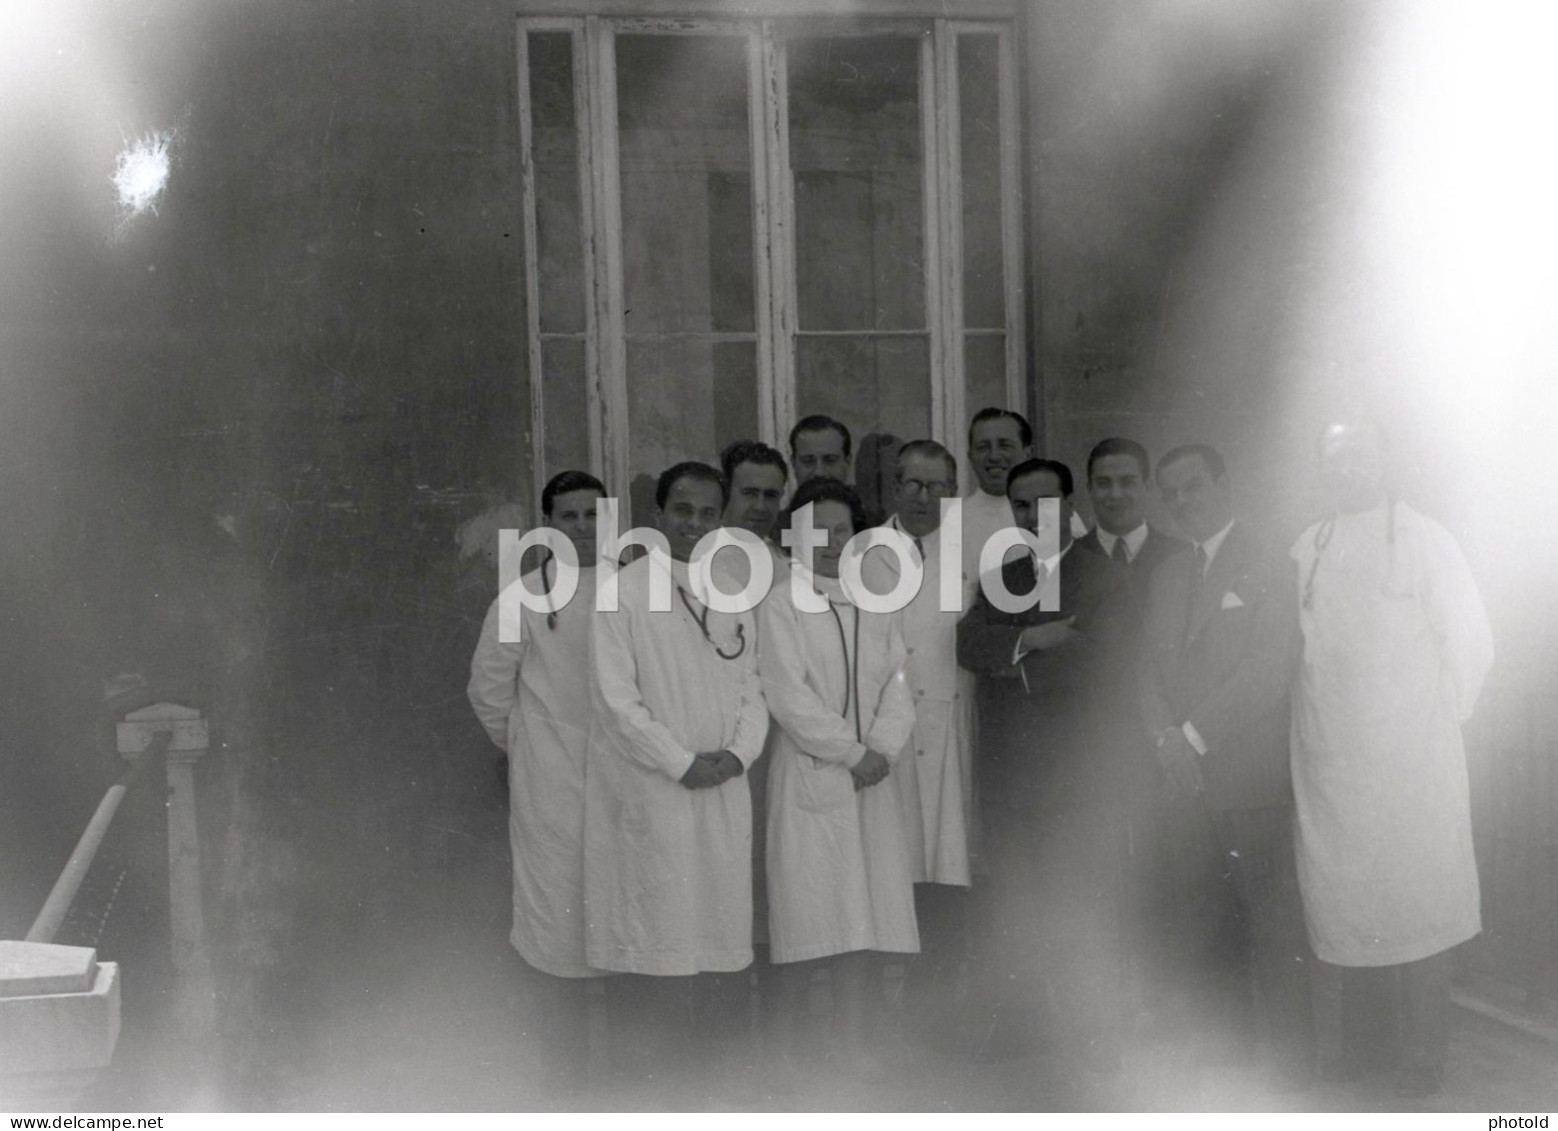 3 NEGATIVES SET 1940 DOUTOR DOUTORES DOCTOR COIMBRA PORTUGAL AMATEUR 60mm NEGATIVE NOT PHOTO FOTO - Non Classificati